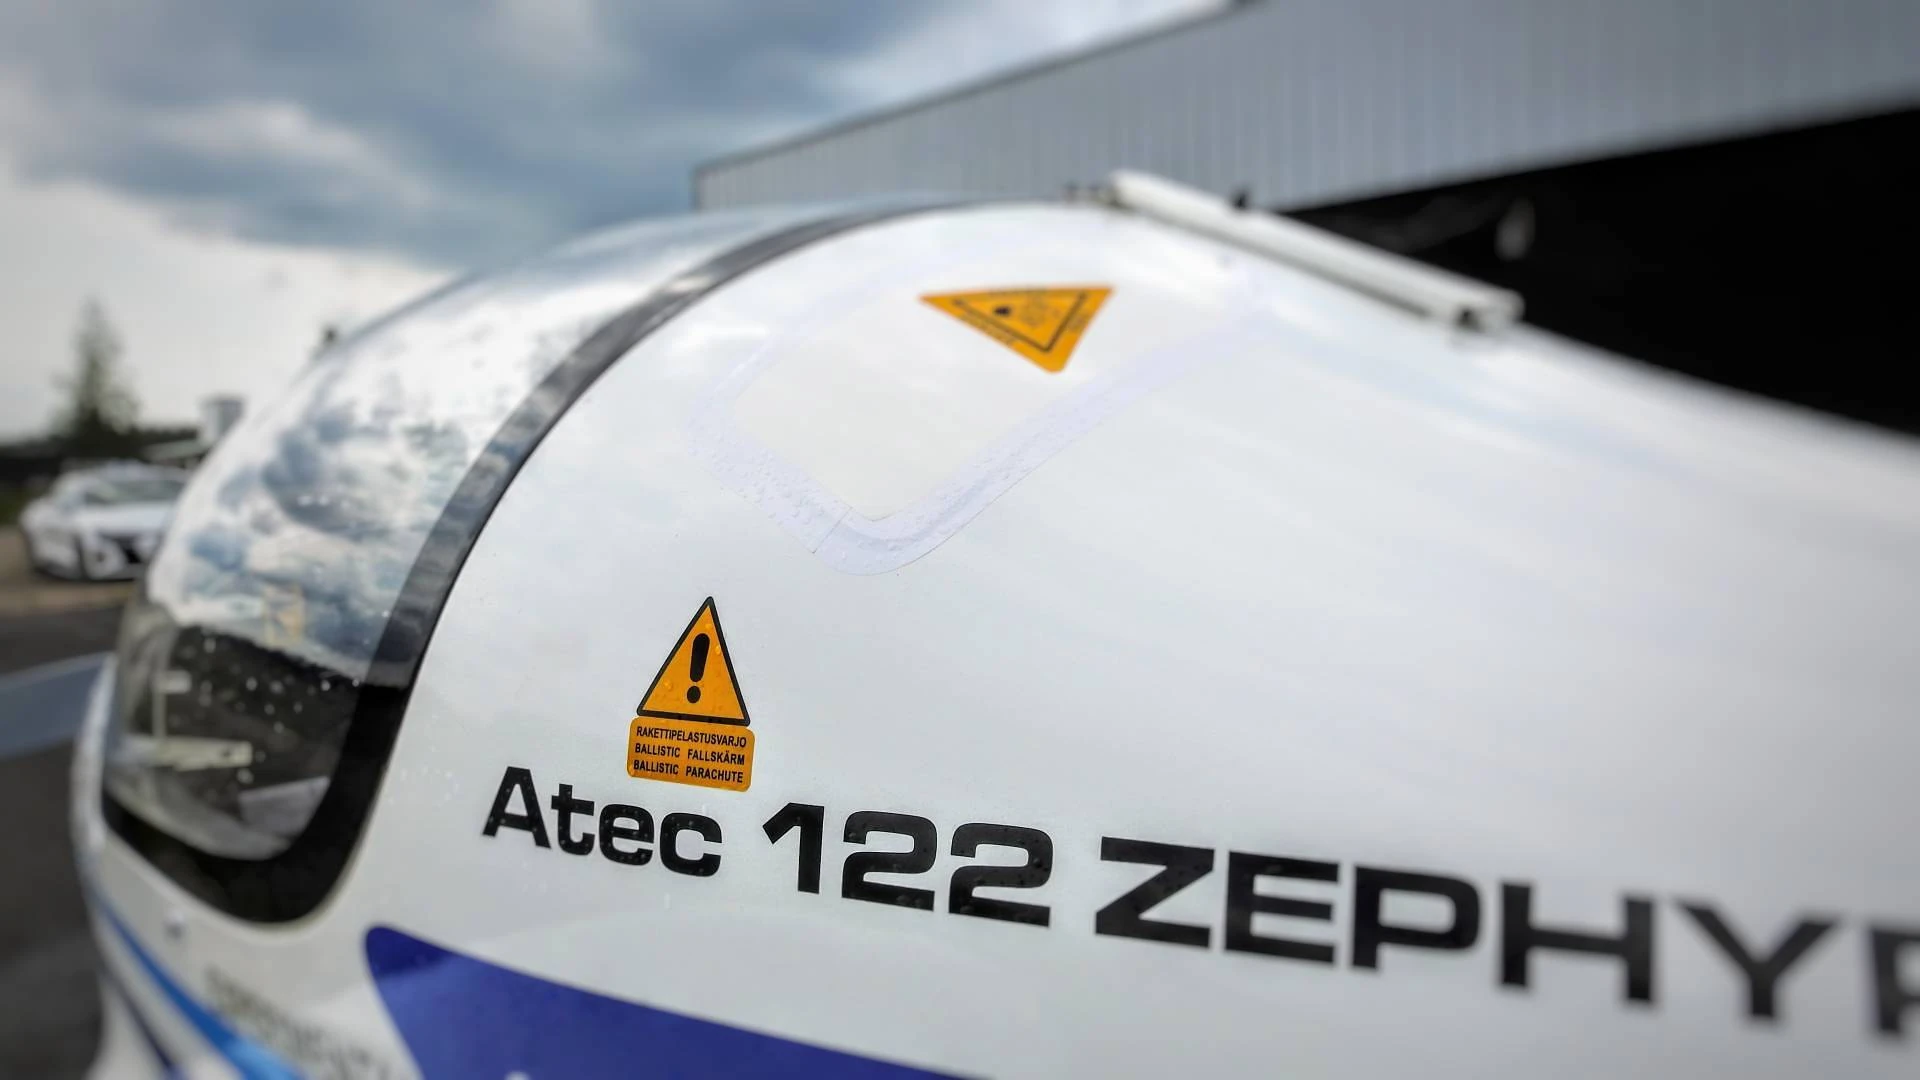 ATEC 122 Zephyr